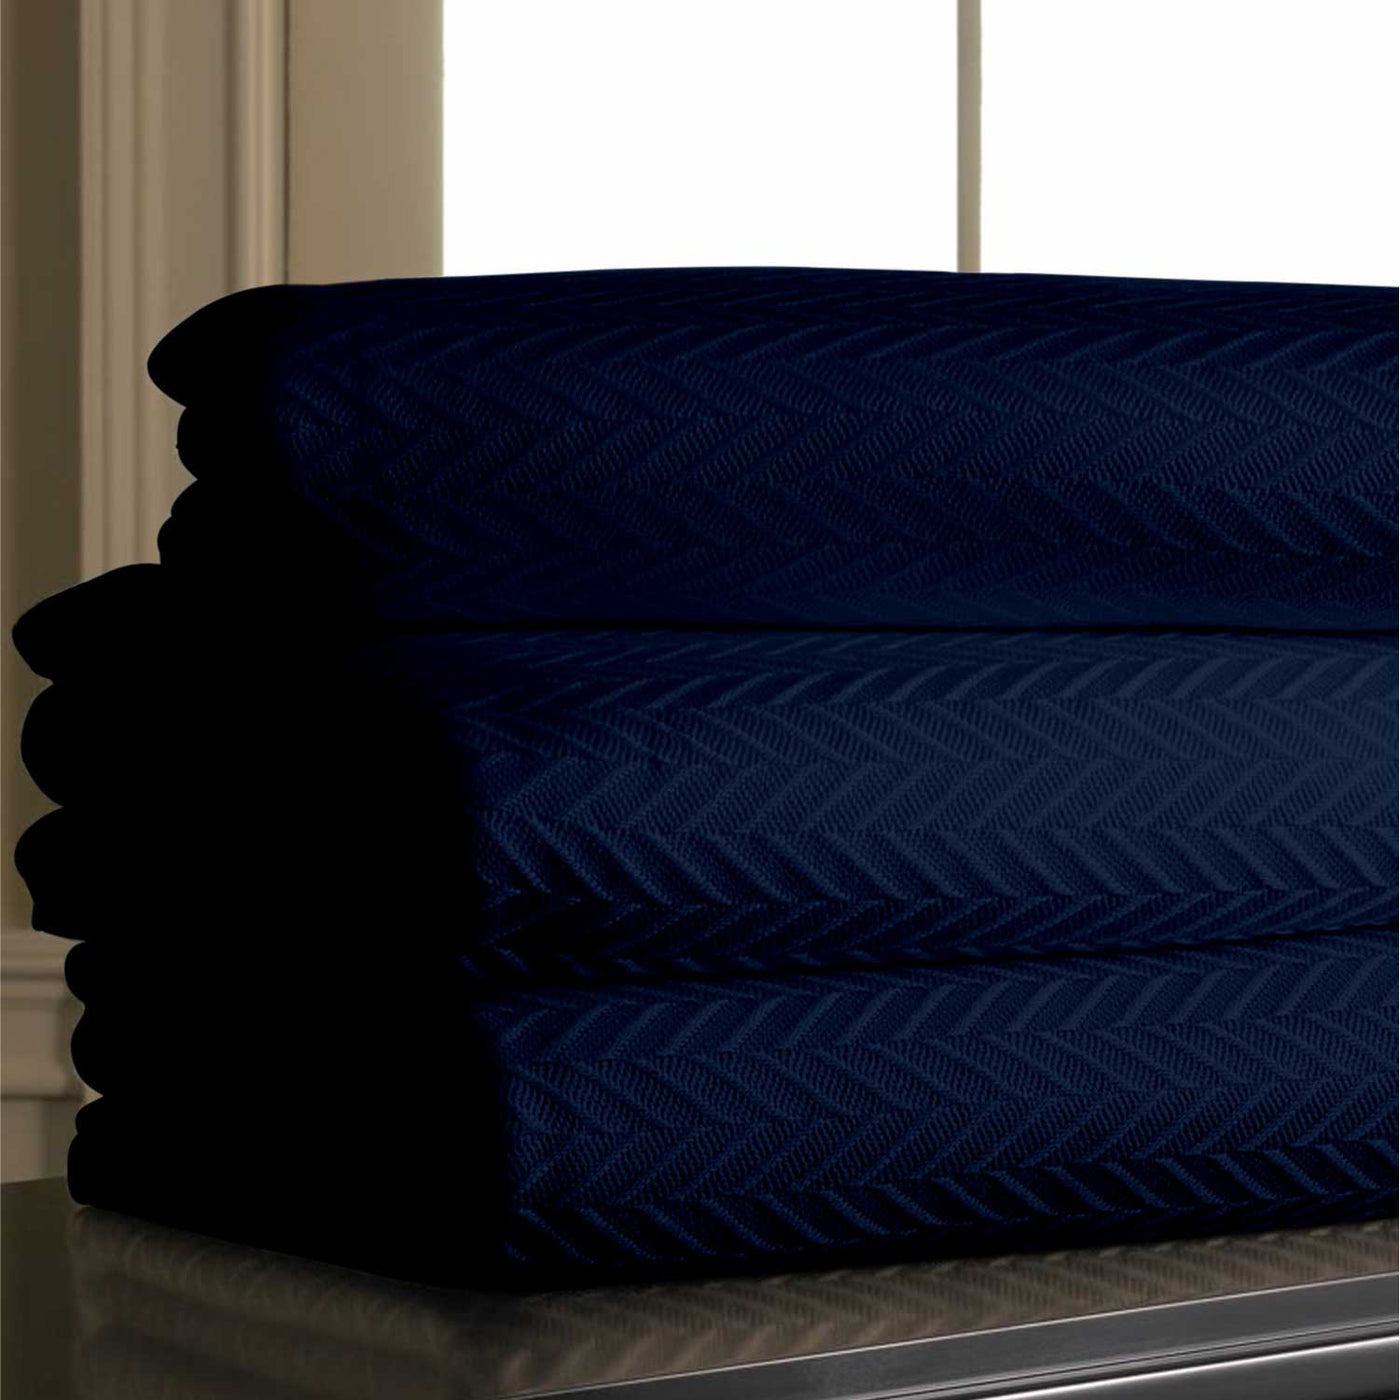 Herringbone Weave Handwoven Blanket - Navy Blue